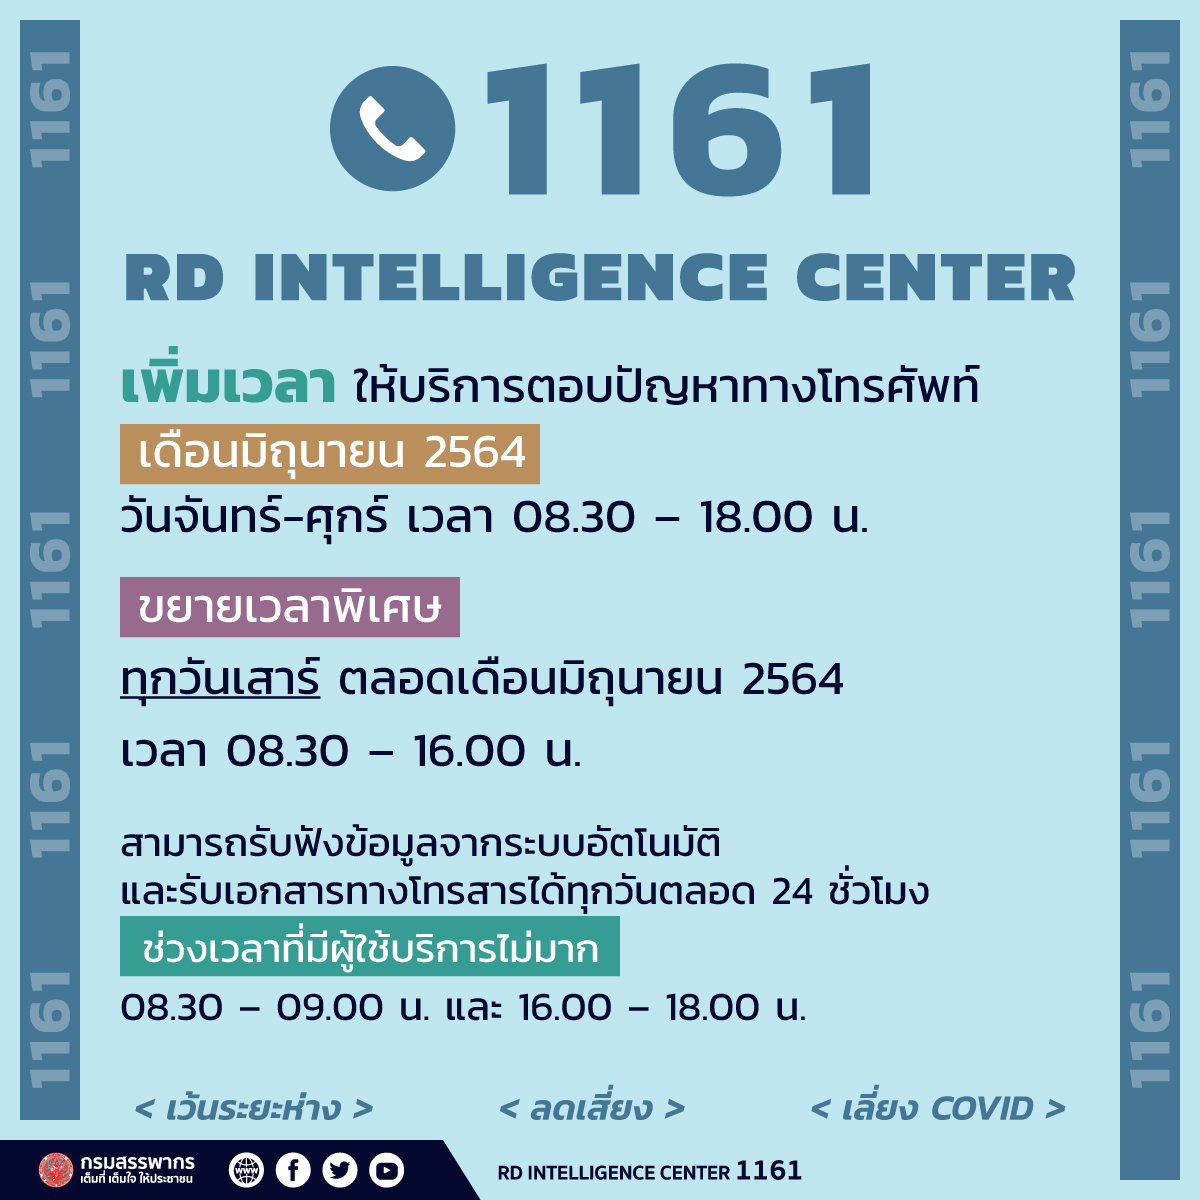 Intelligence Center 1161 เพิ่มเวลาให้บริการเดือนมิถุนายน 2564 สอบถามปัญหาทางโทรศัพท์ จันทร์-ศุกร์ 08.30 - 18.00 น. วันเสาร์ 08.30 - 16.00 น.